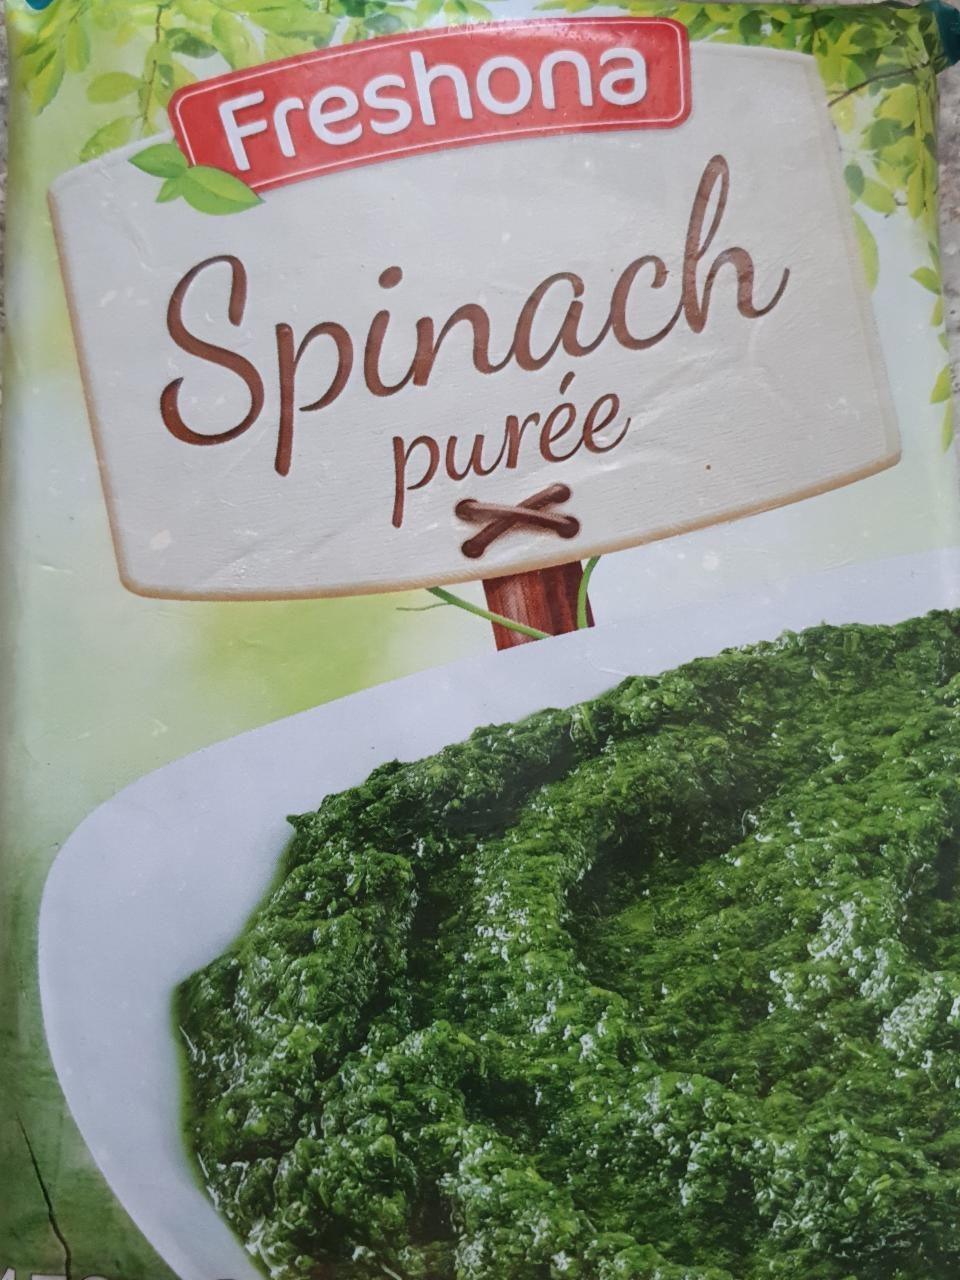 Képek - Spinach purée Freshbona